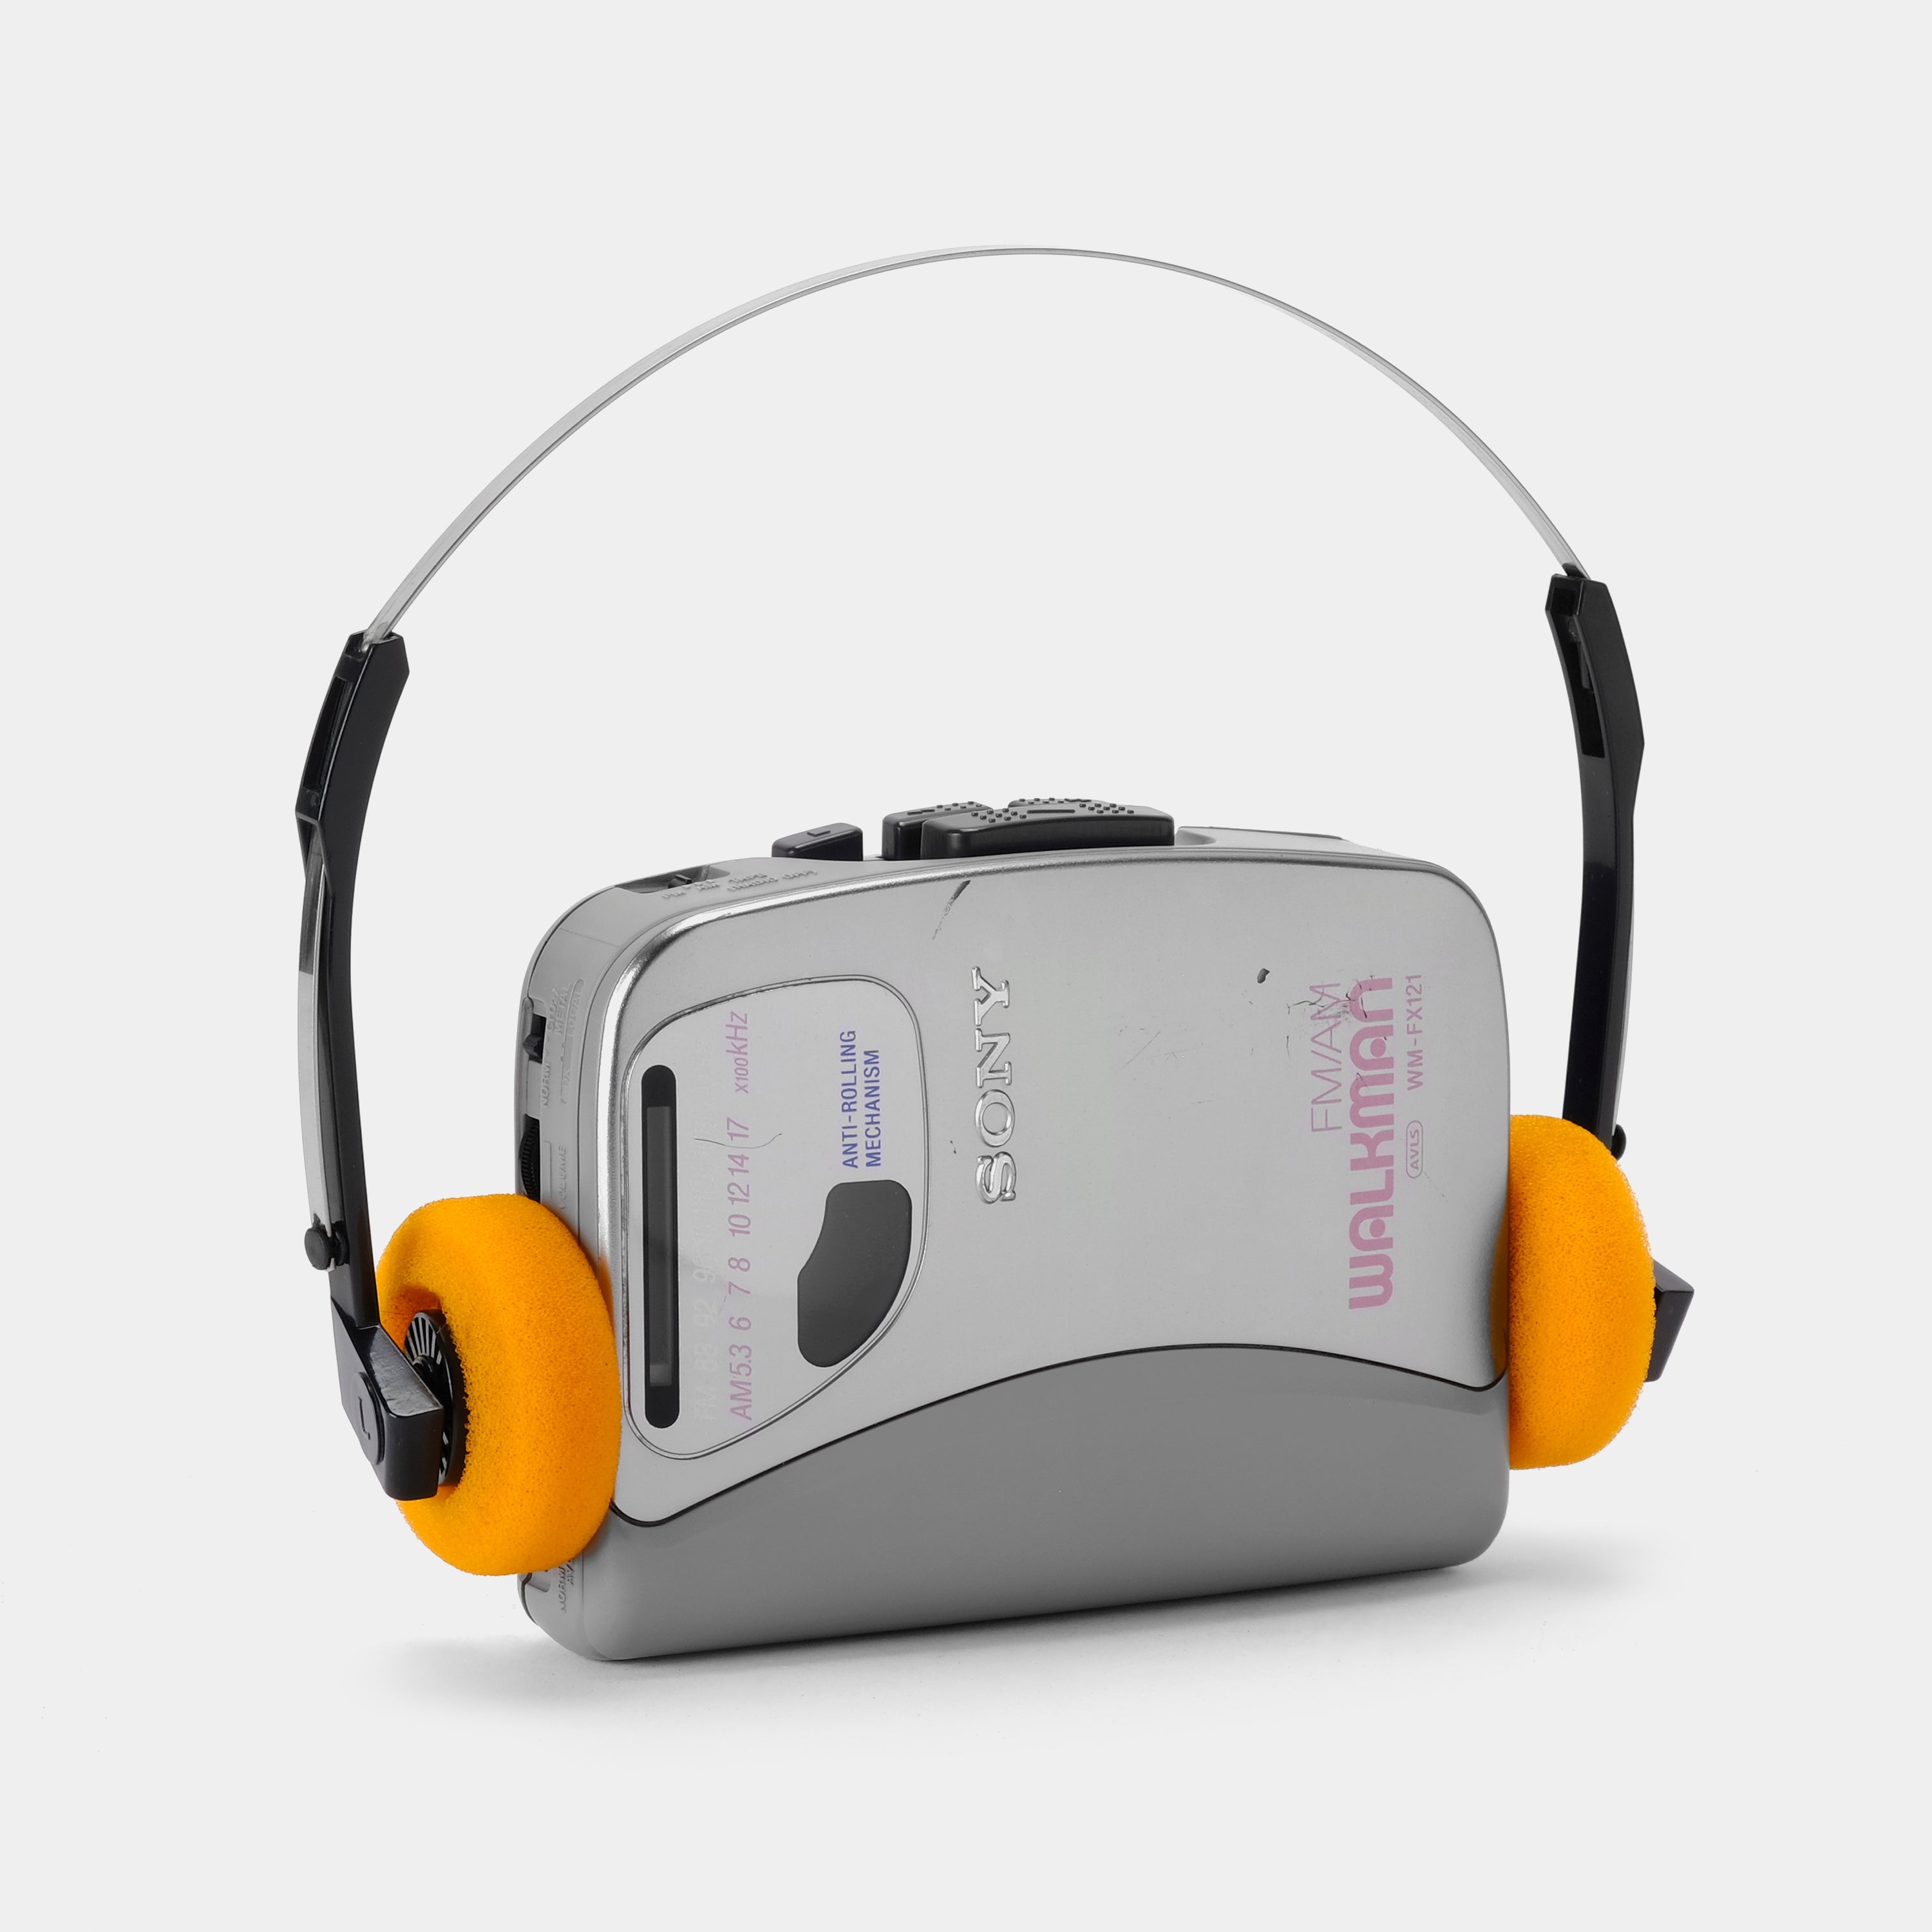 Sony Walkman WM-FX121 AM/FM Silver Portable Cassette Player